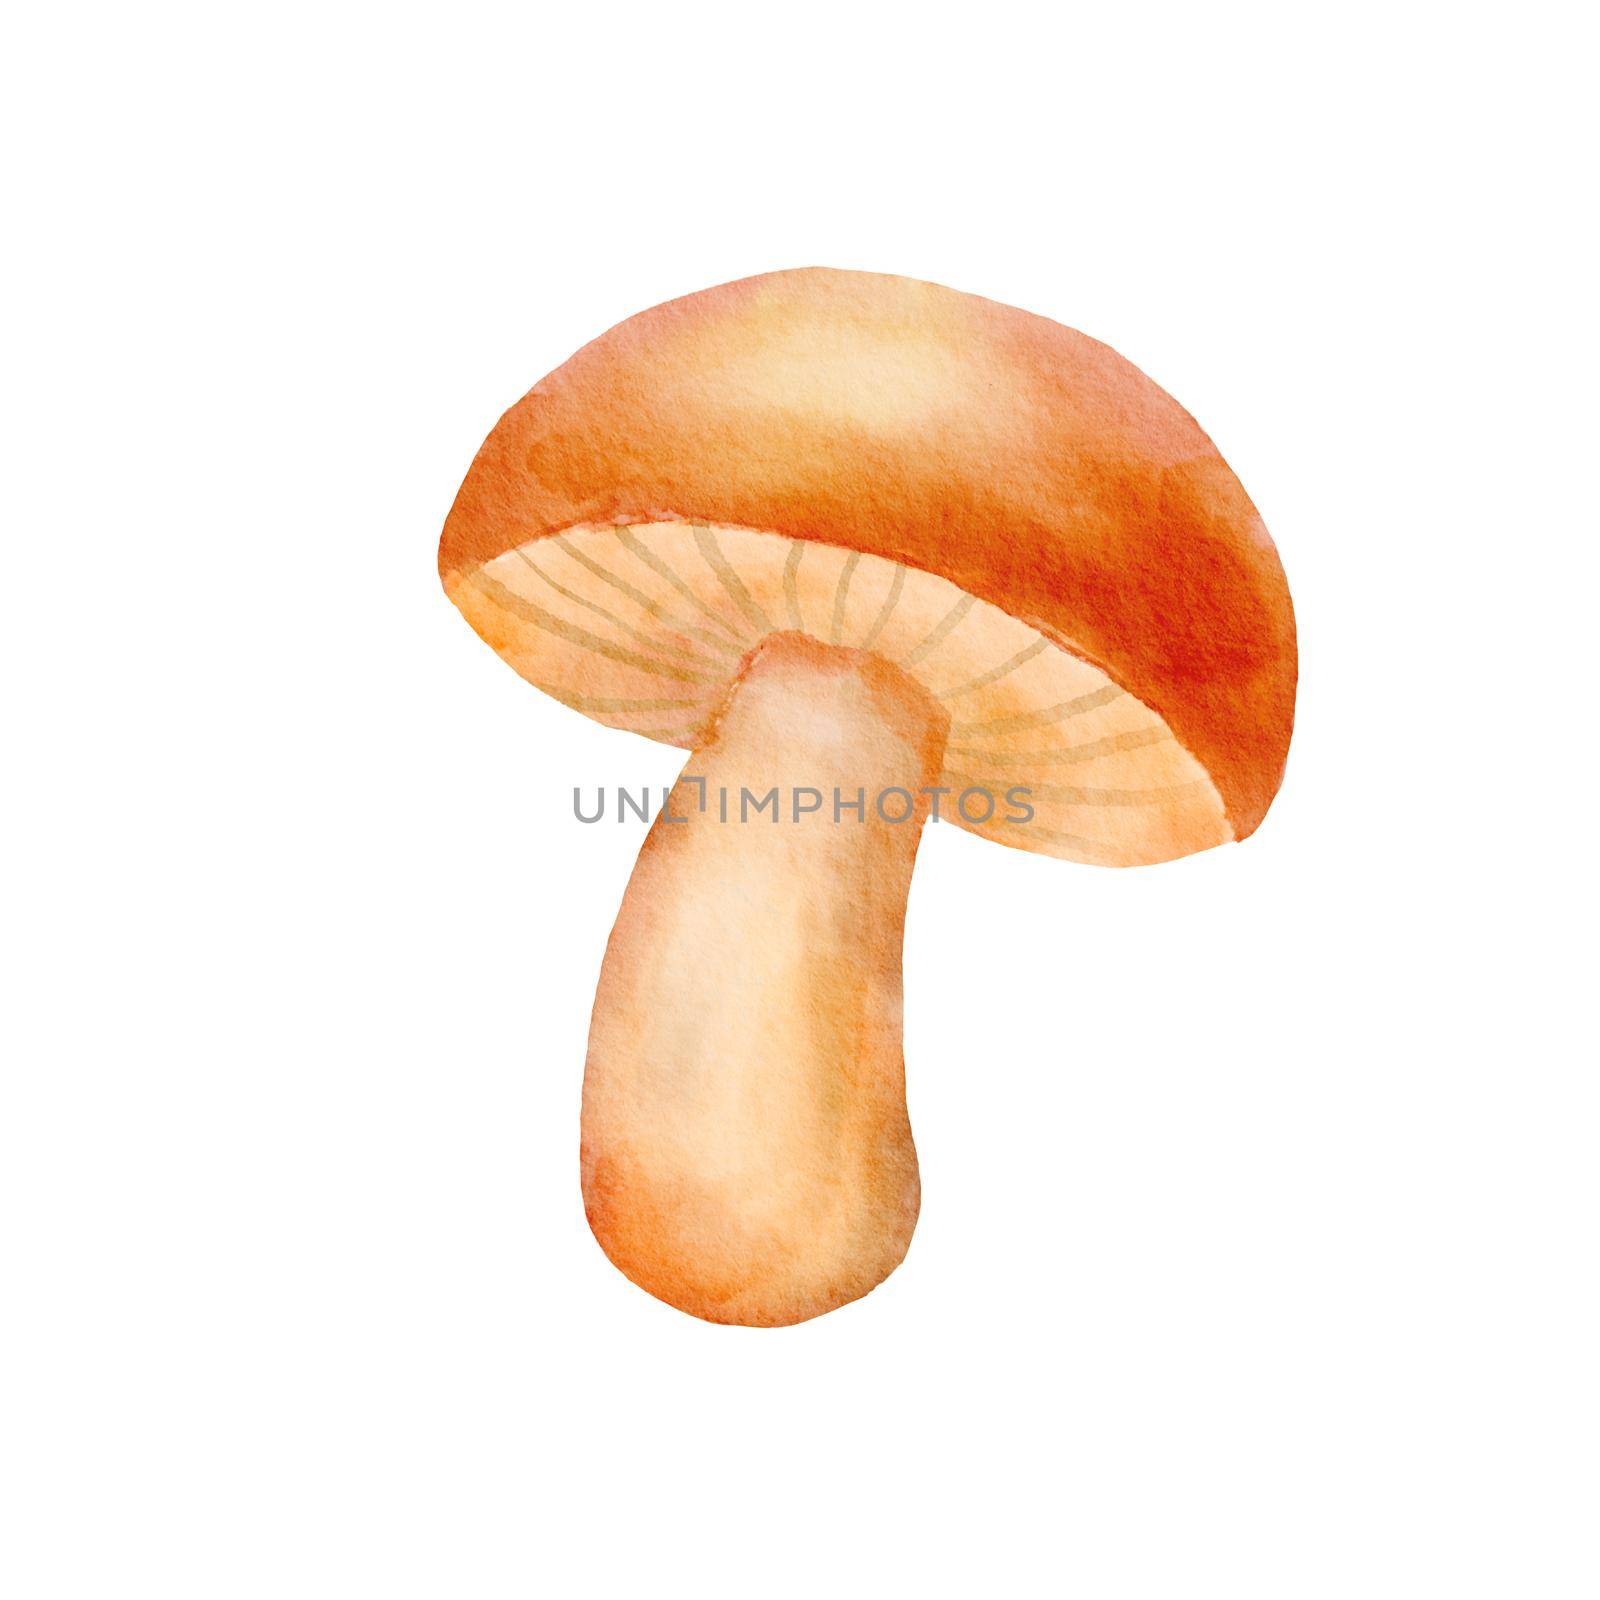 Boletus mushroom isolated on white background. Watercolor cute illustration of autumn forest mushroom by ElenaPlatova